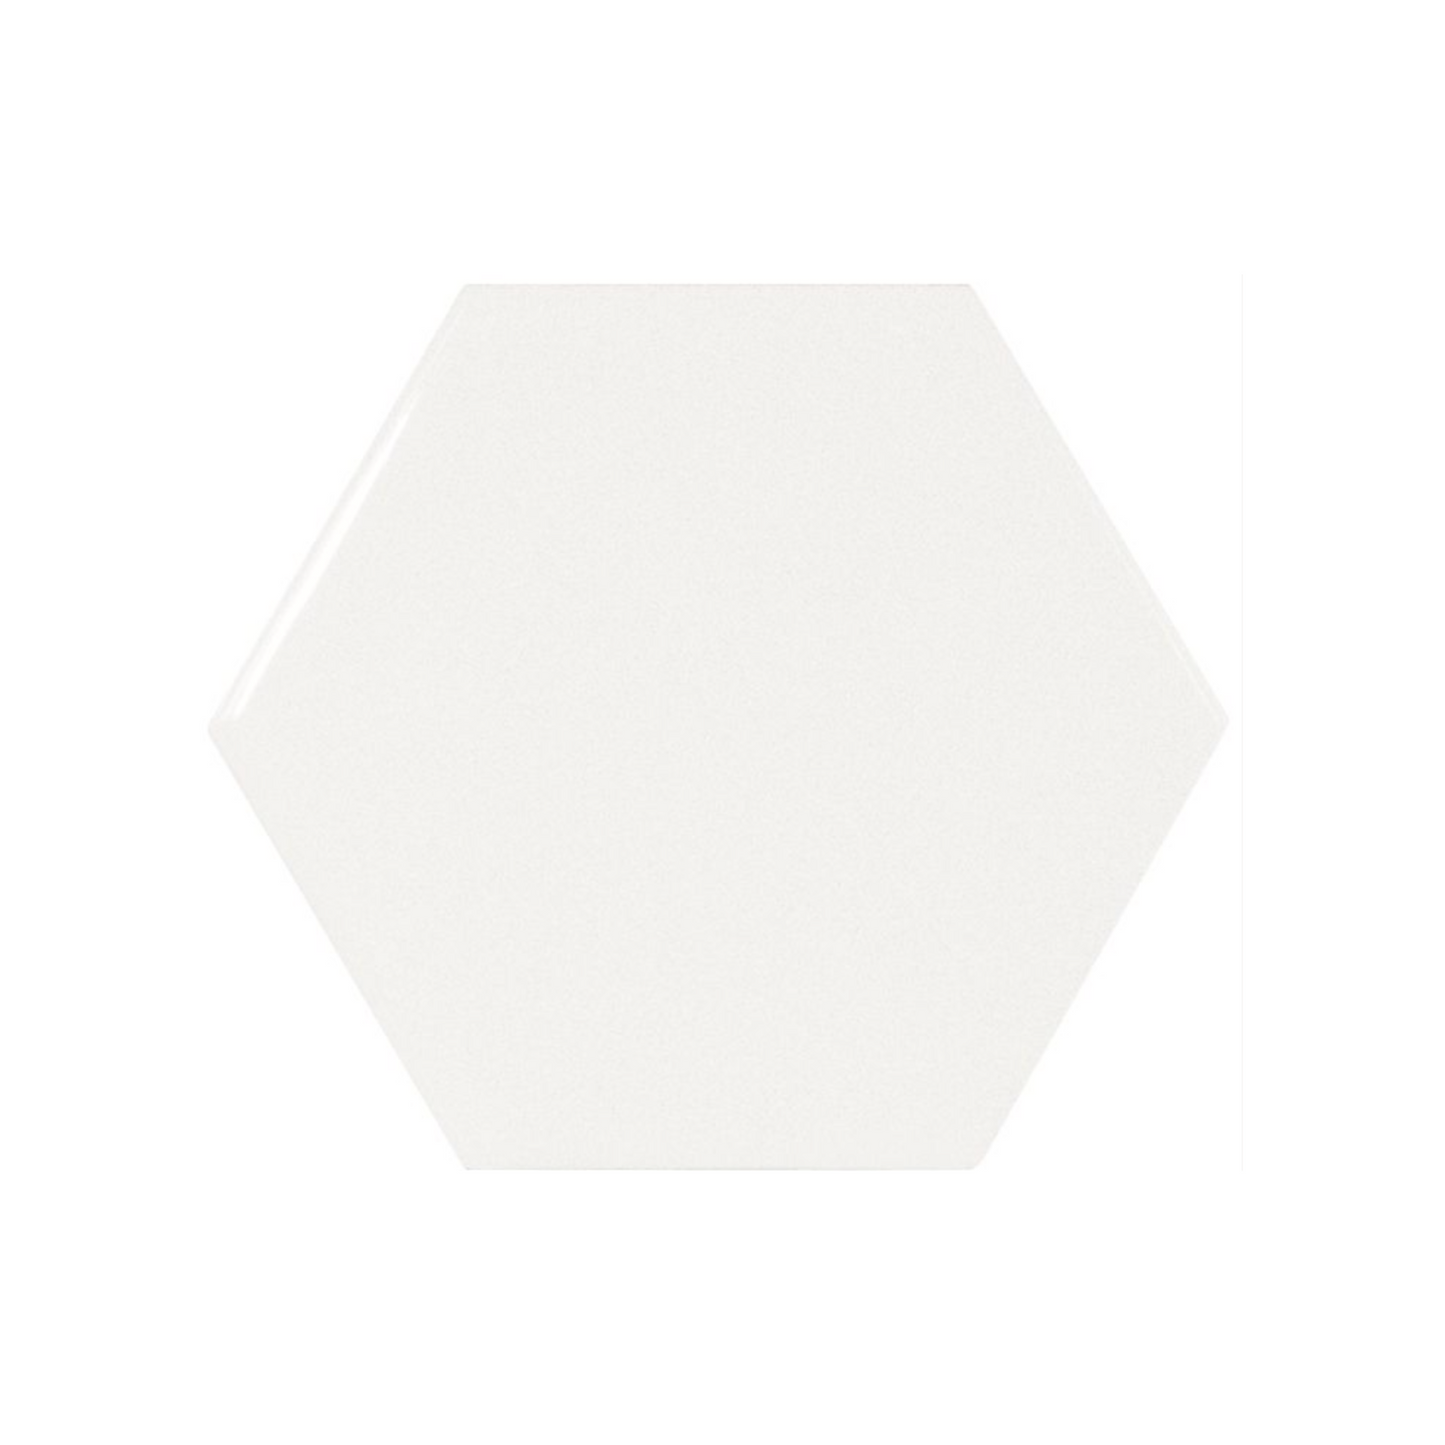 Hexagon White Tile